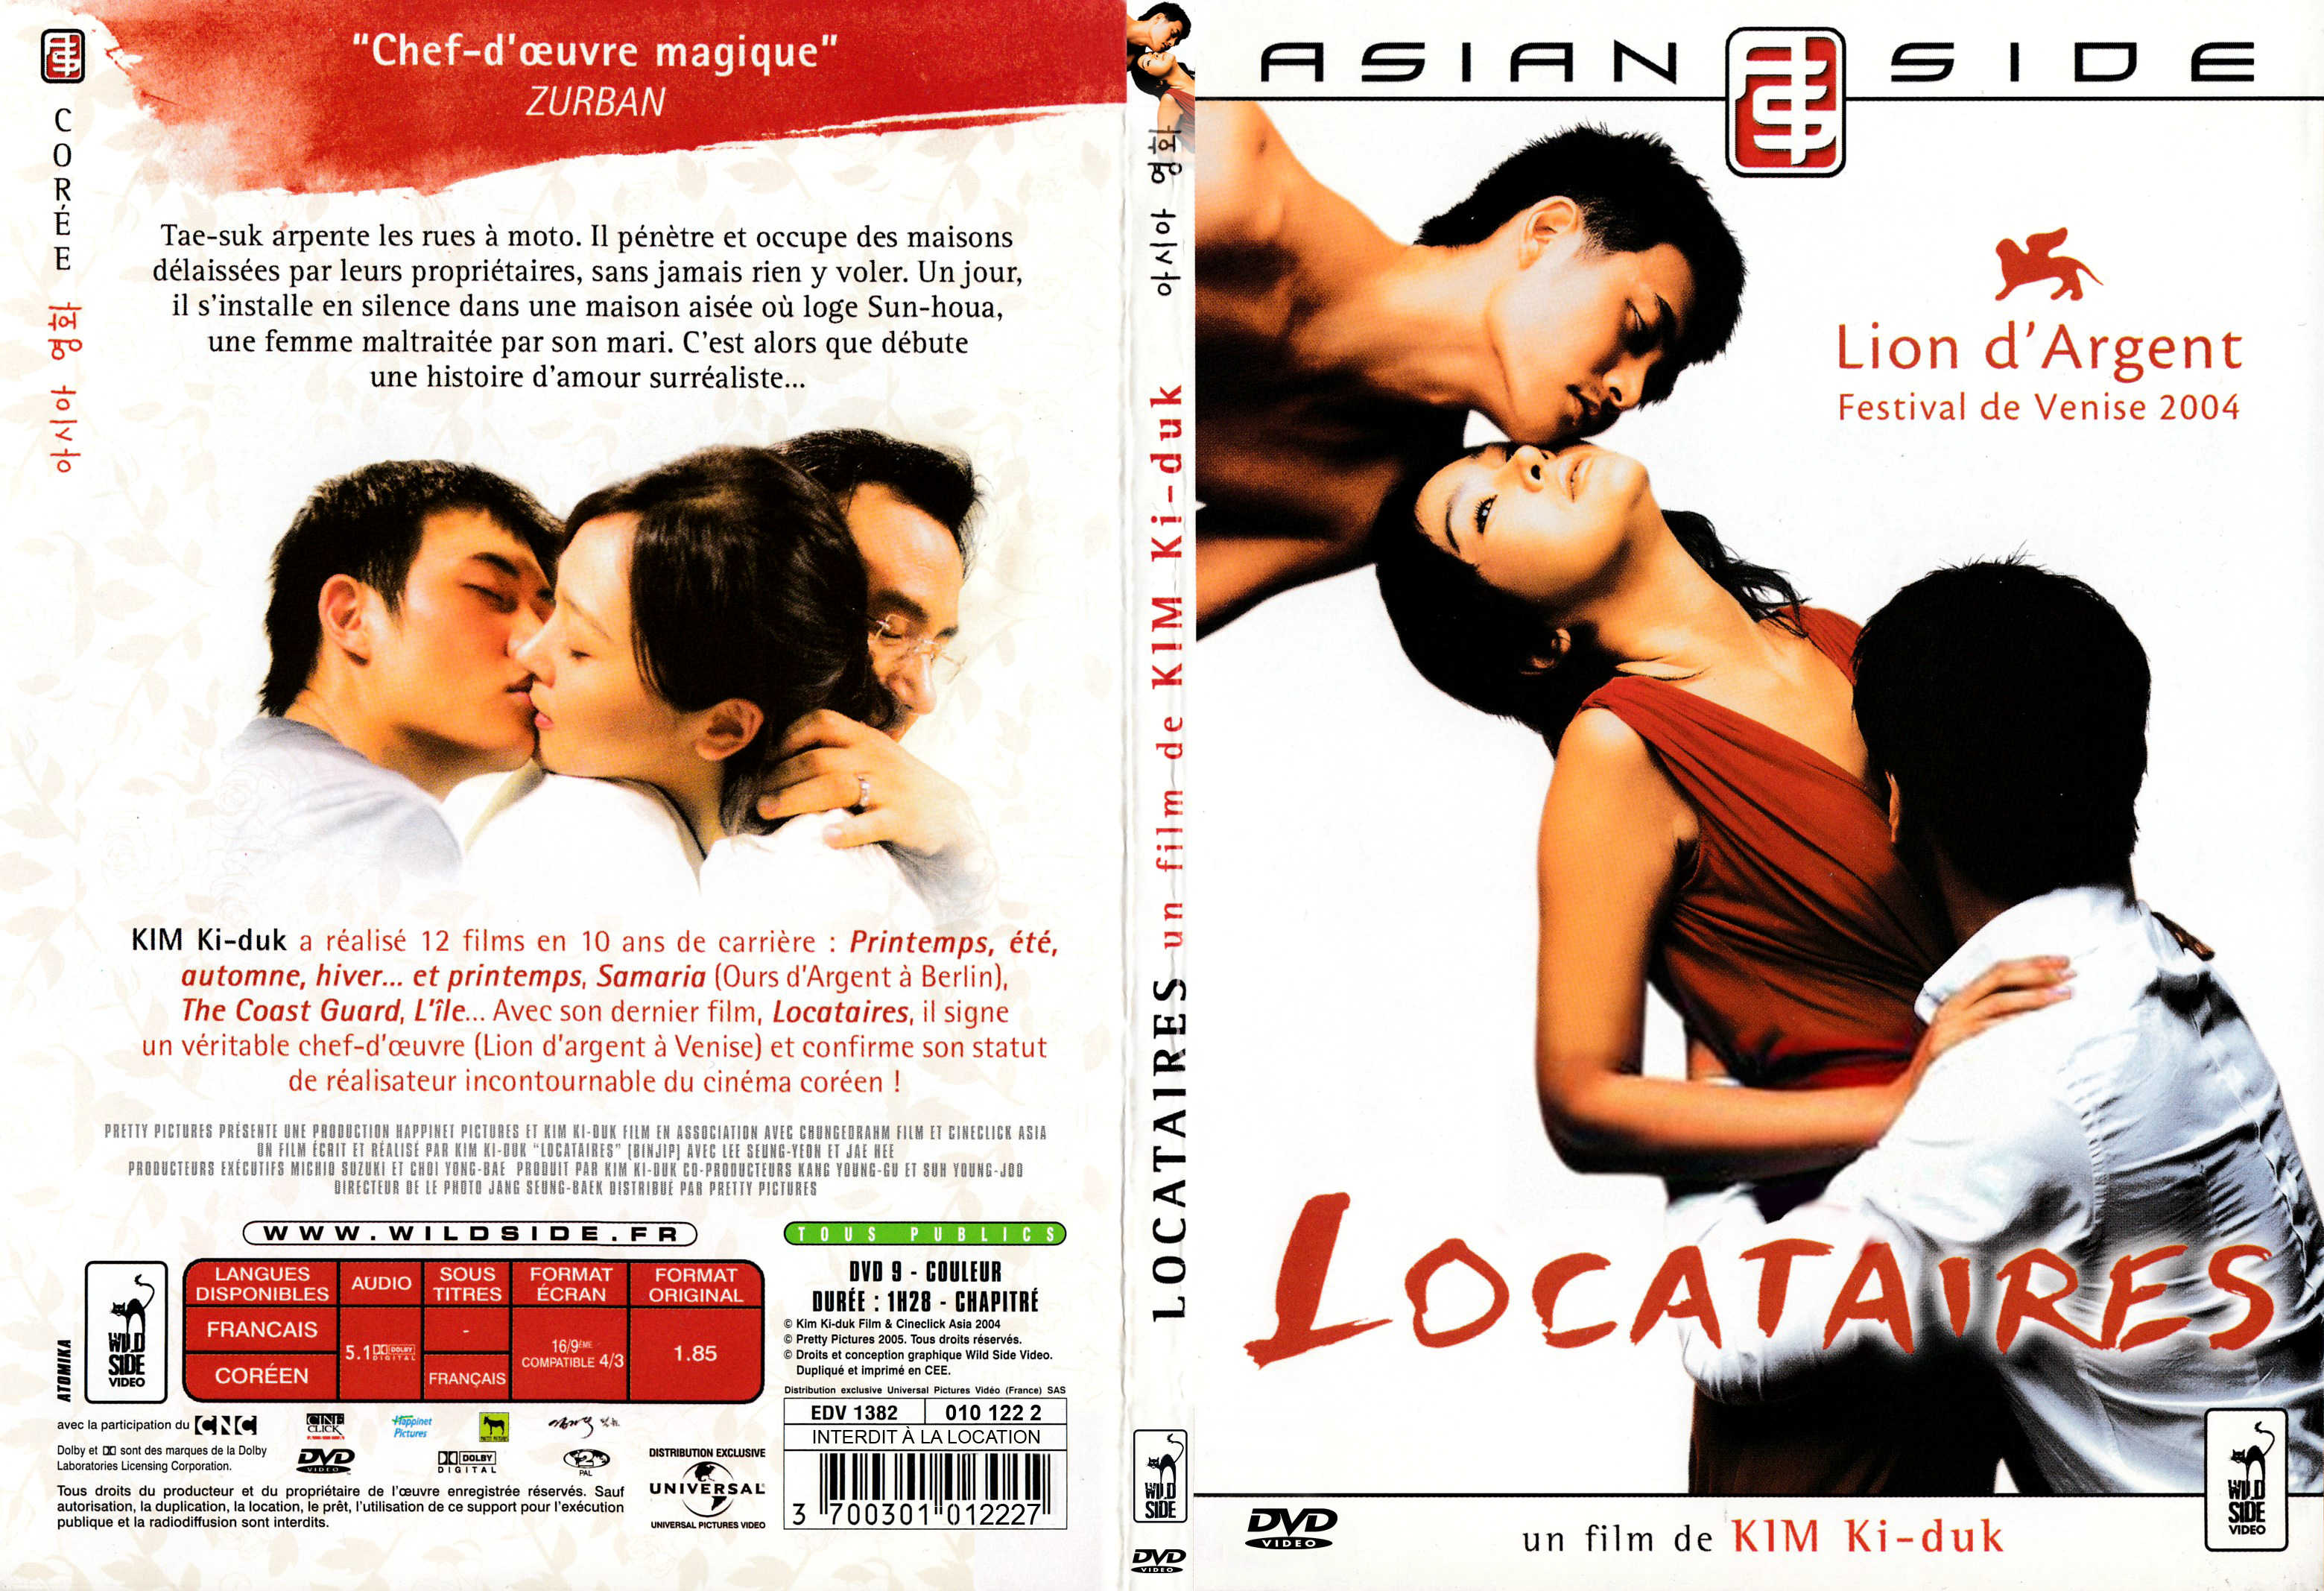 Jaquette DVD Locataires v2